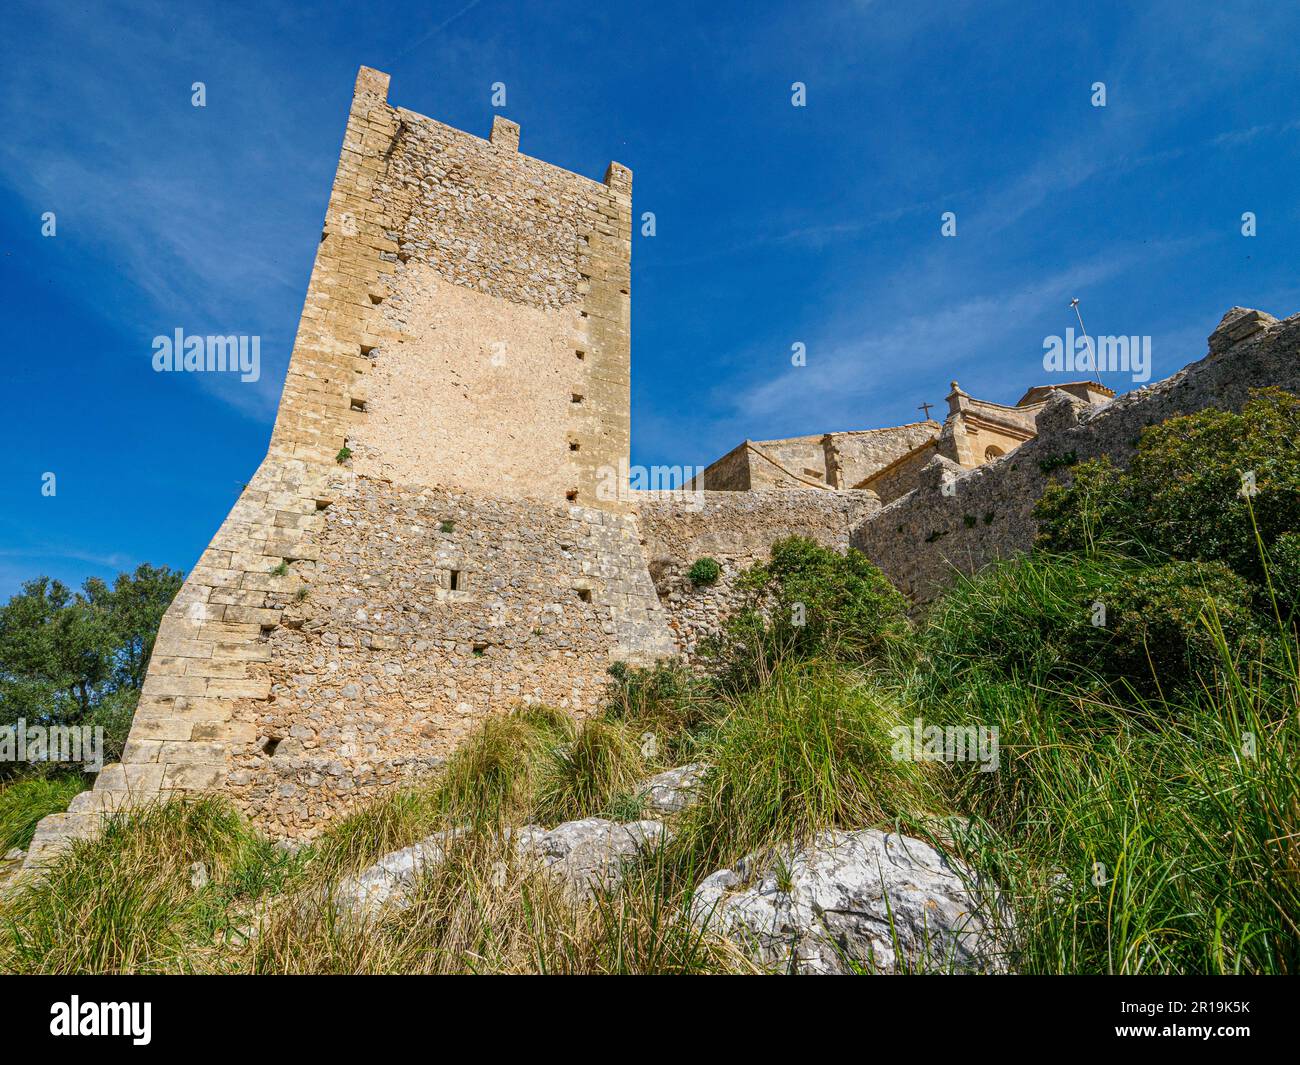 Le Santuari de la Mare de Deu del Puig fortifié sur le sommet de Puig de Maria à l'extérieur de Pollenca dans les montagnes Tramuntana de Majorque Espagne Banque D'Images